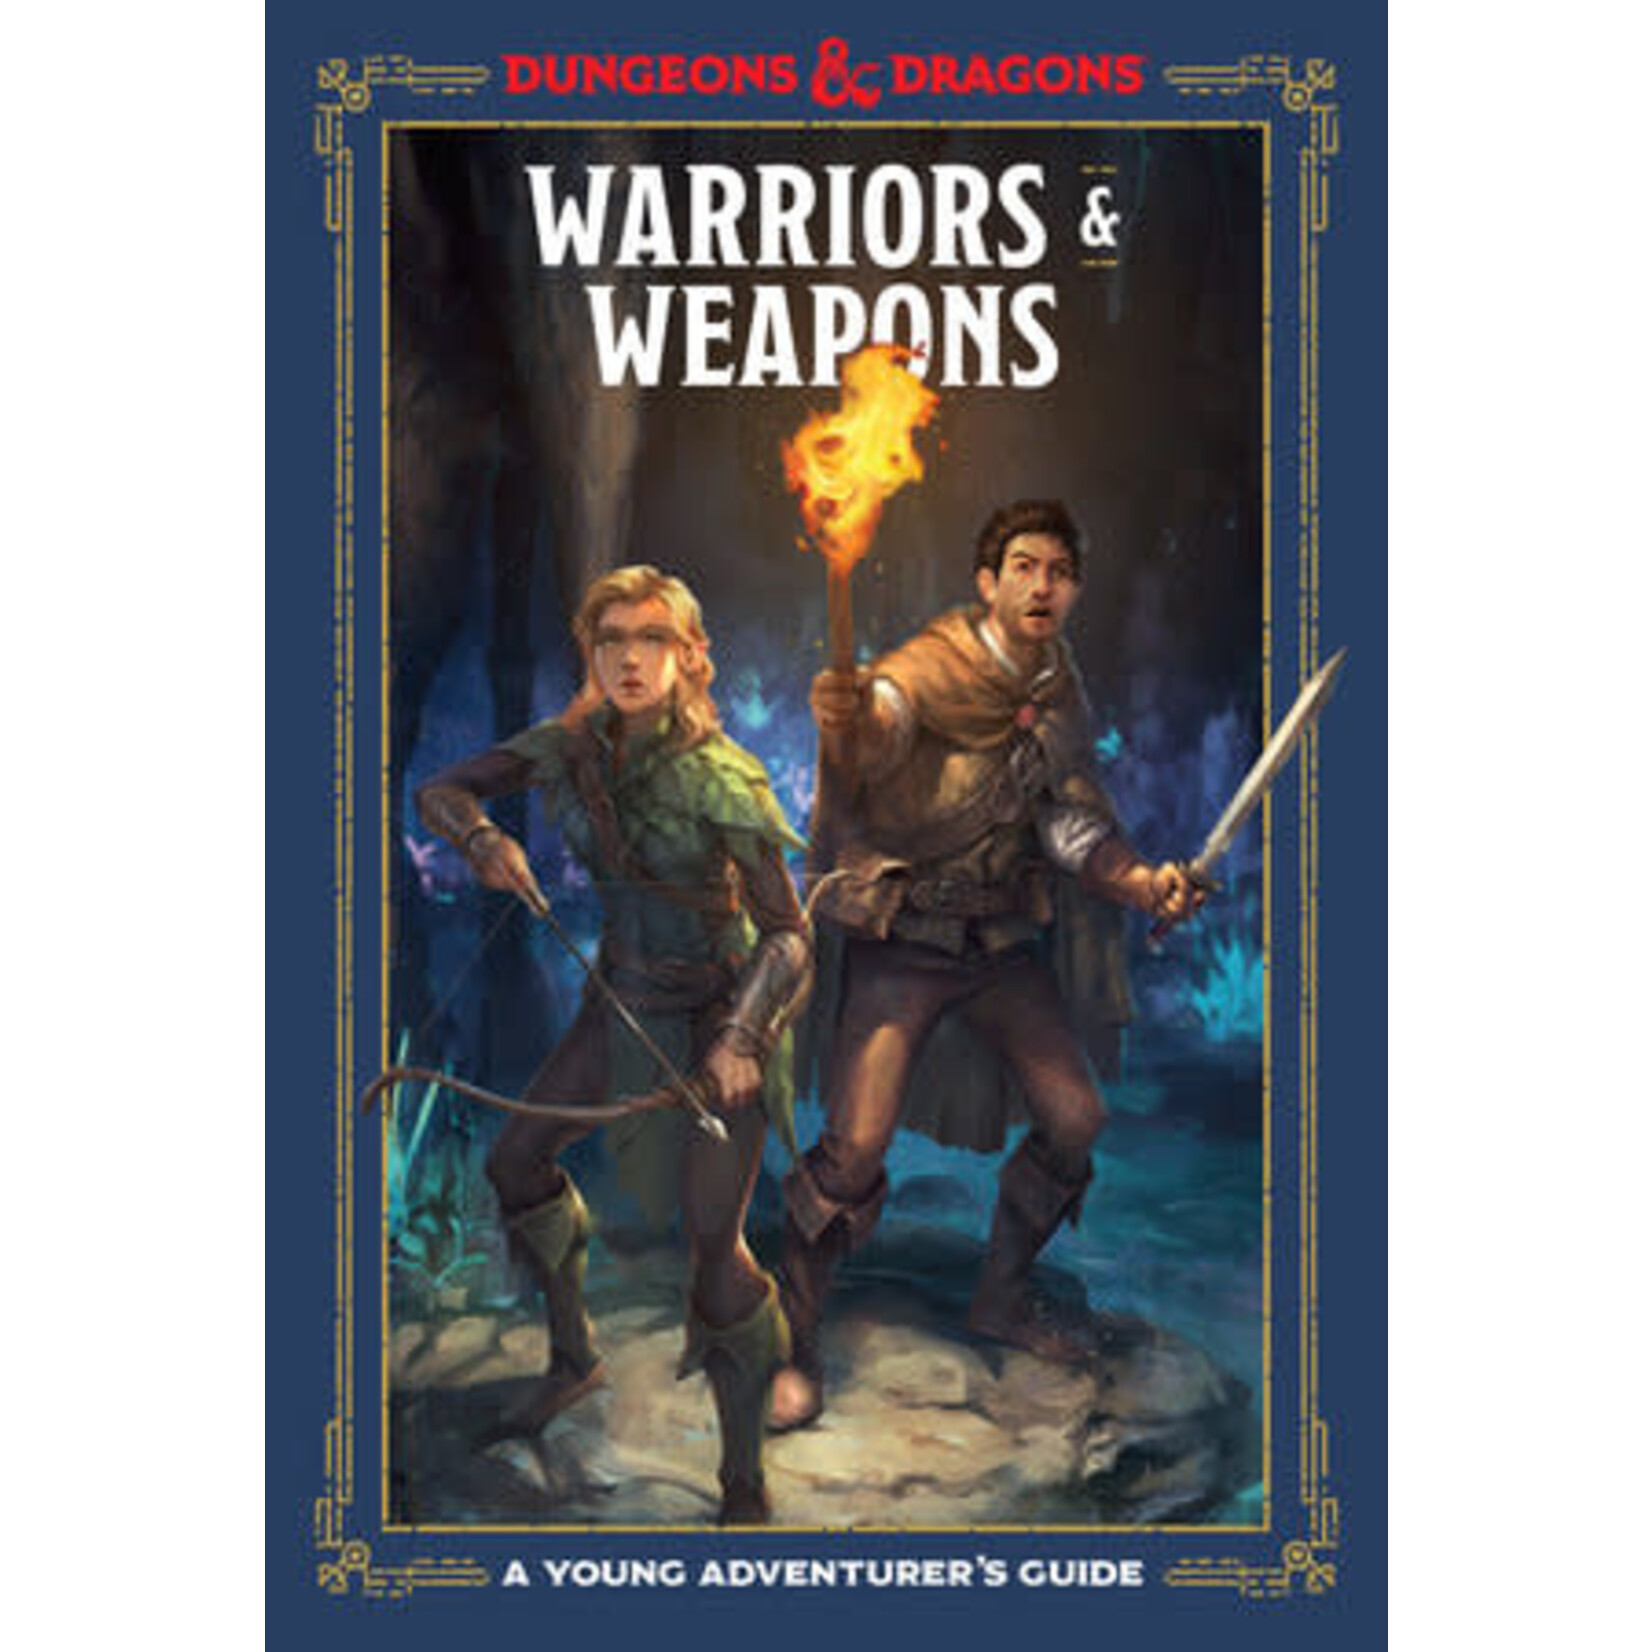 Penguin Random House D&D: Young Adventurer's Guide - Warriors & Weapons